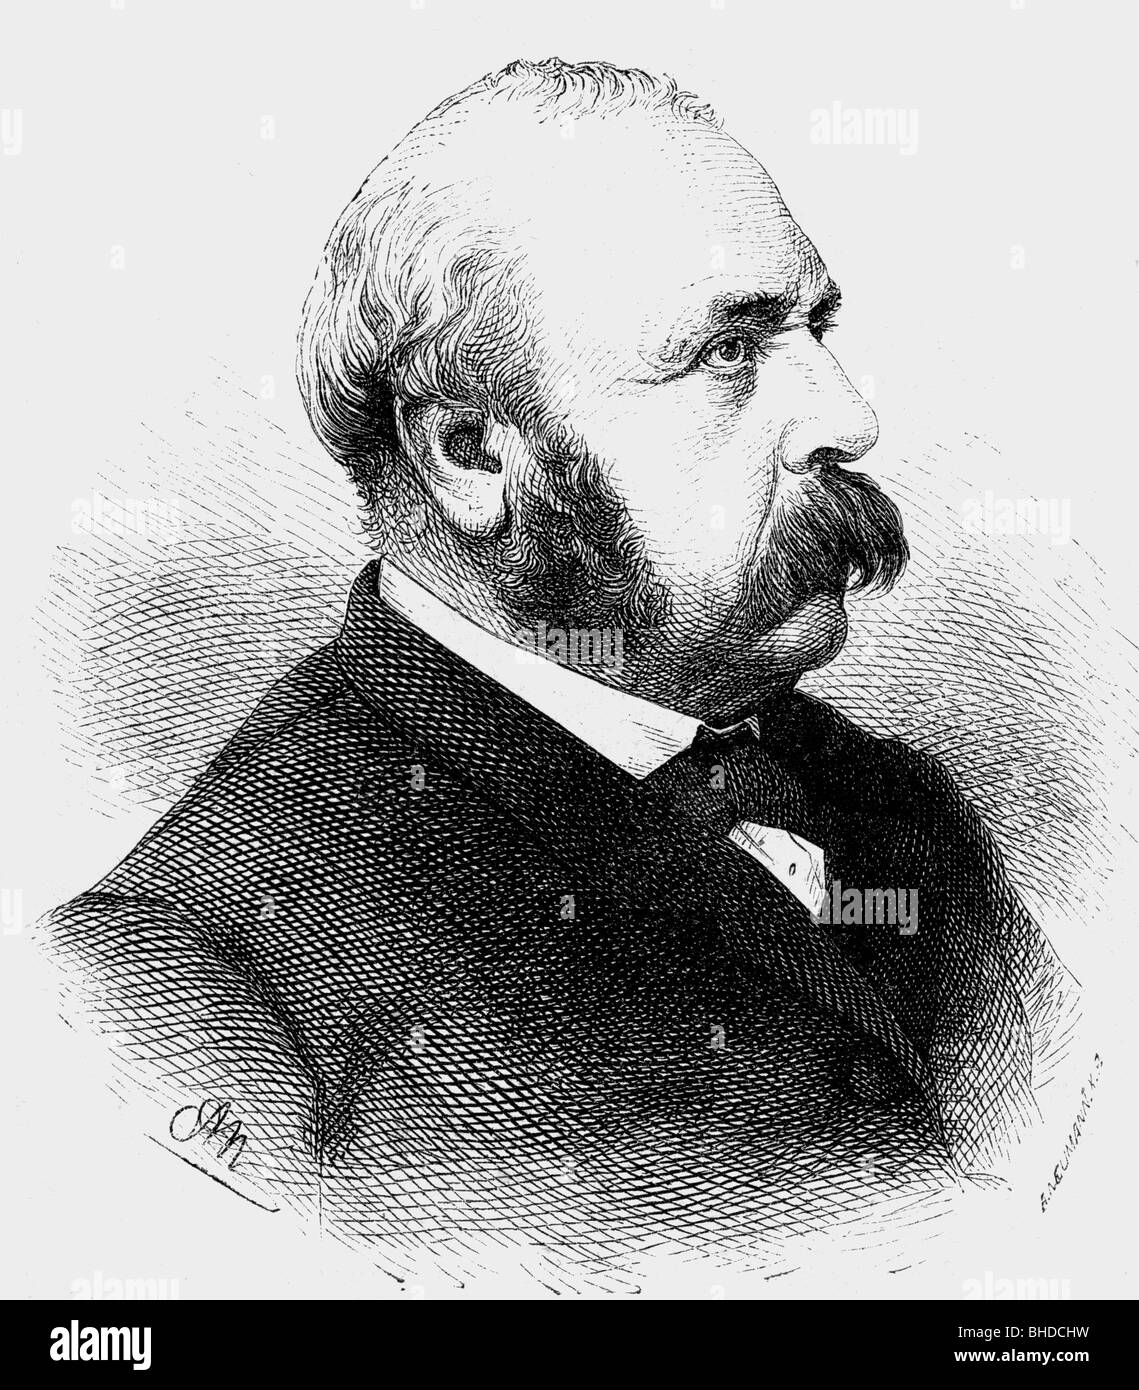 Ledru-Rollin, Alexandre Auguste, 2.2.1807 - 31.12.1874, French jurist, politician, portrait, wood engraving by Adolf Neumann, Stock Photo